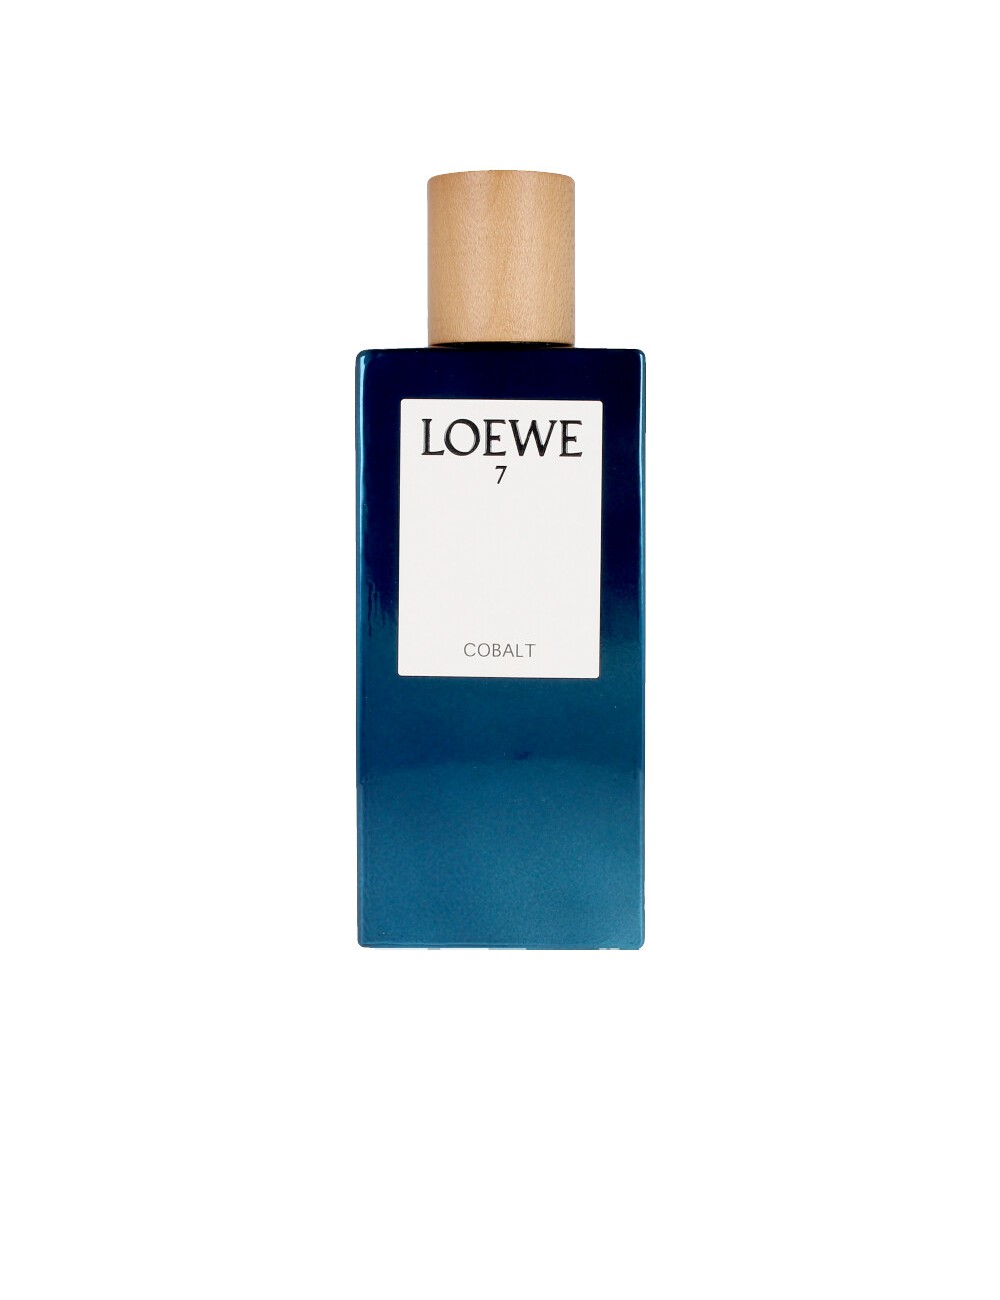 LOEWE 7 COBALT eau de parfum vaporisateur 100 ml